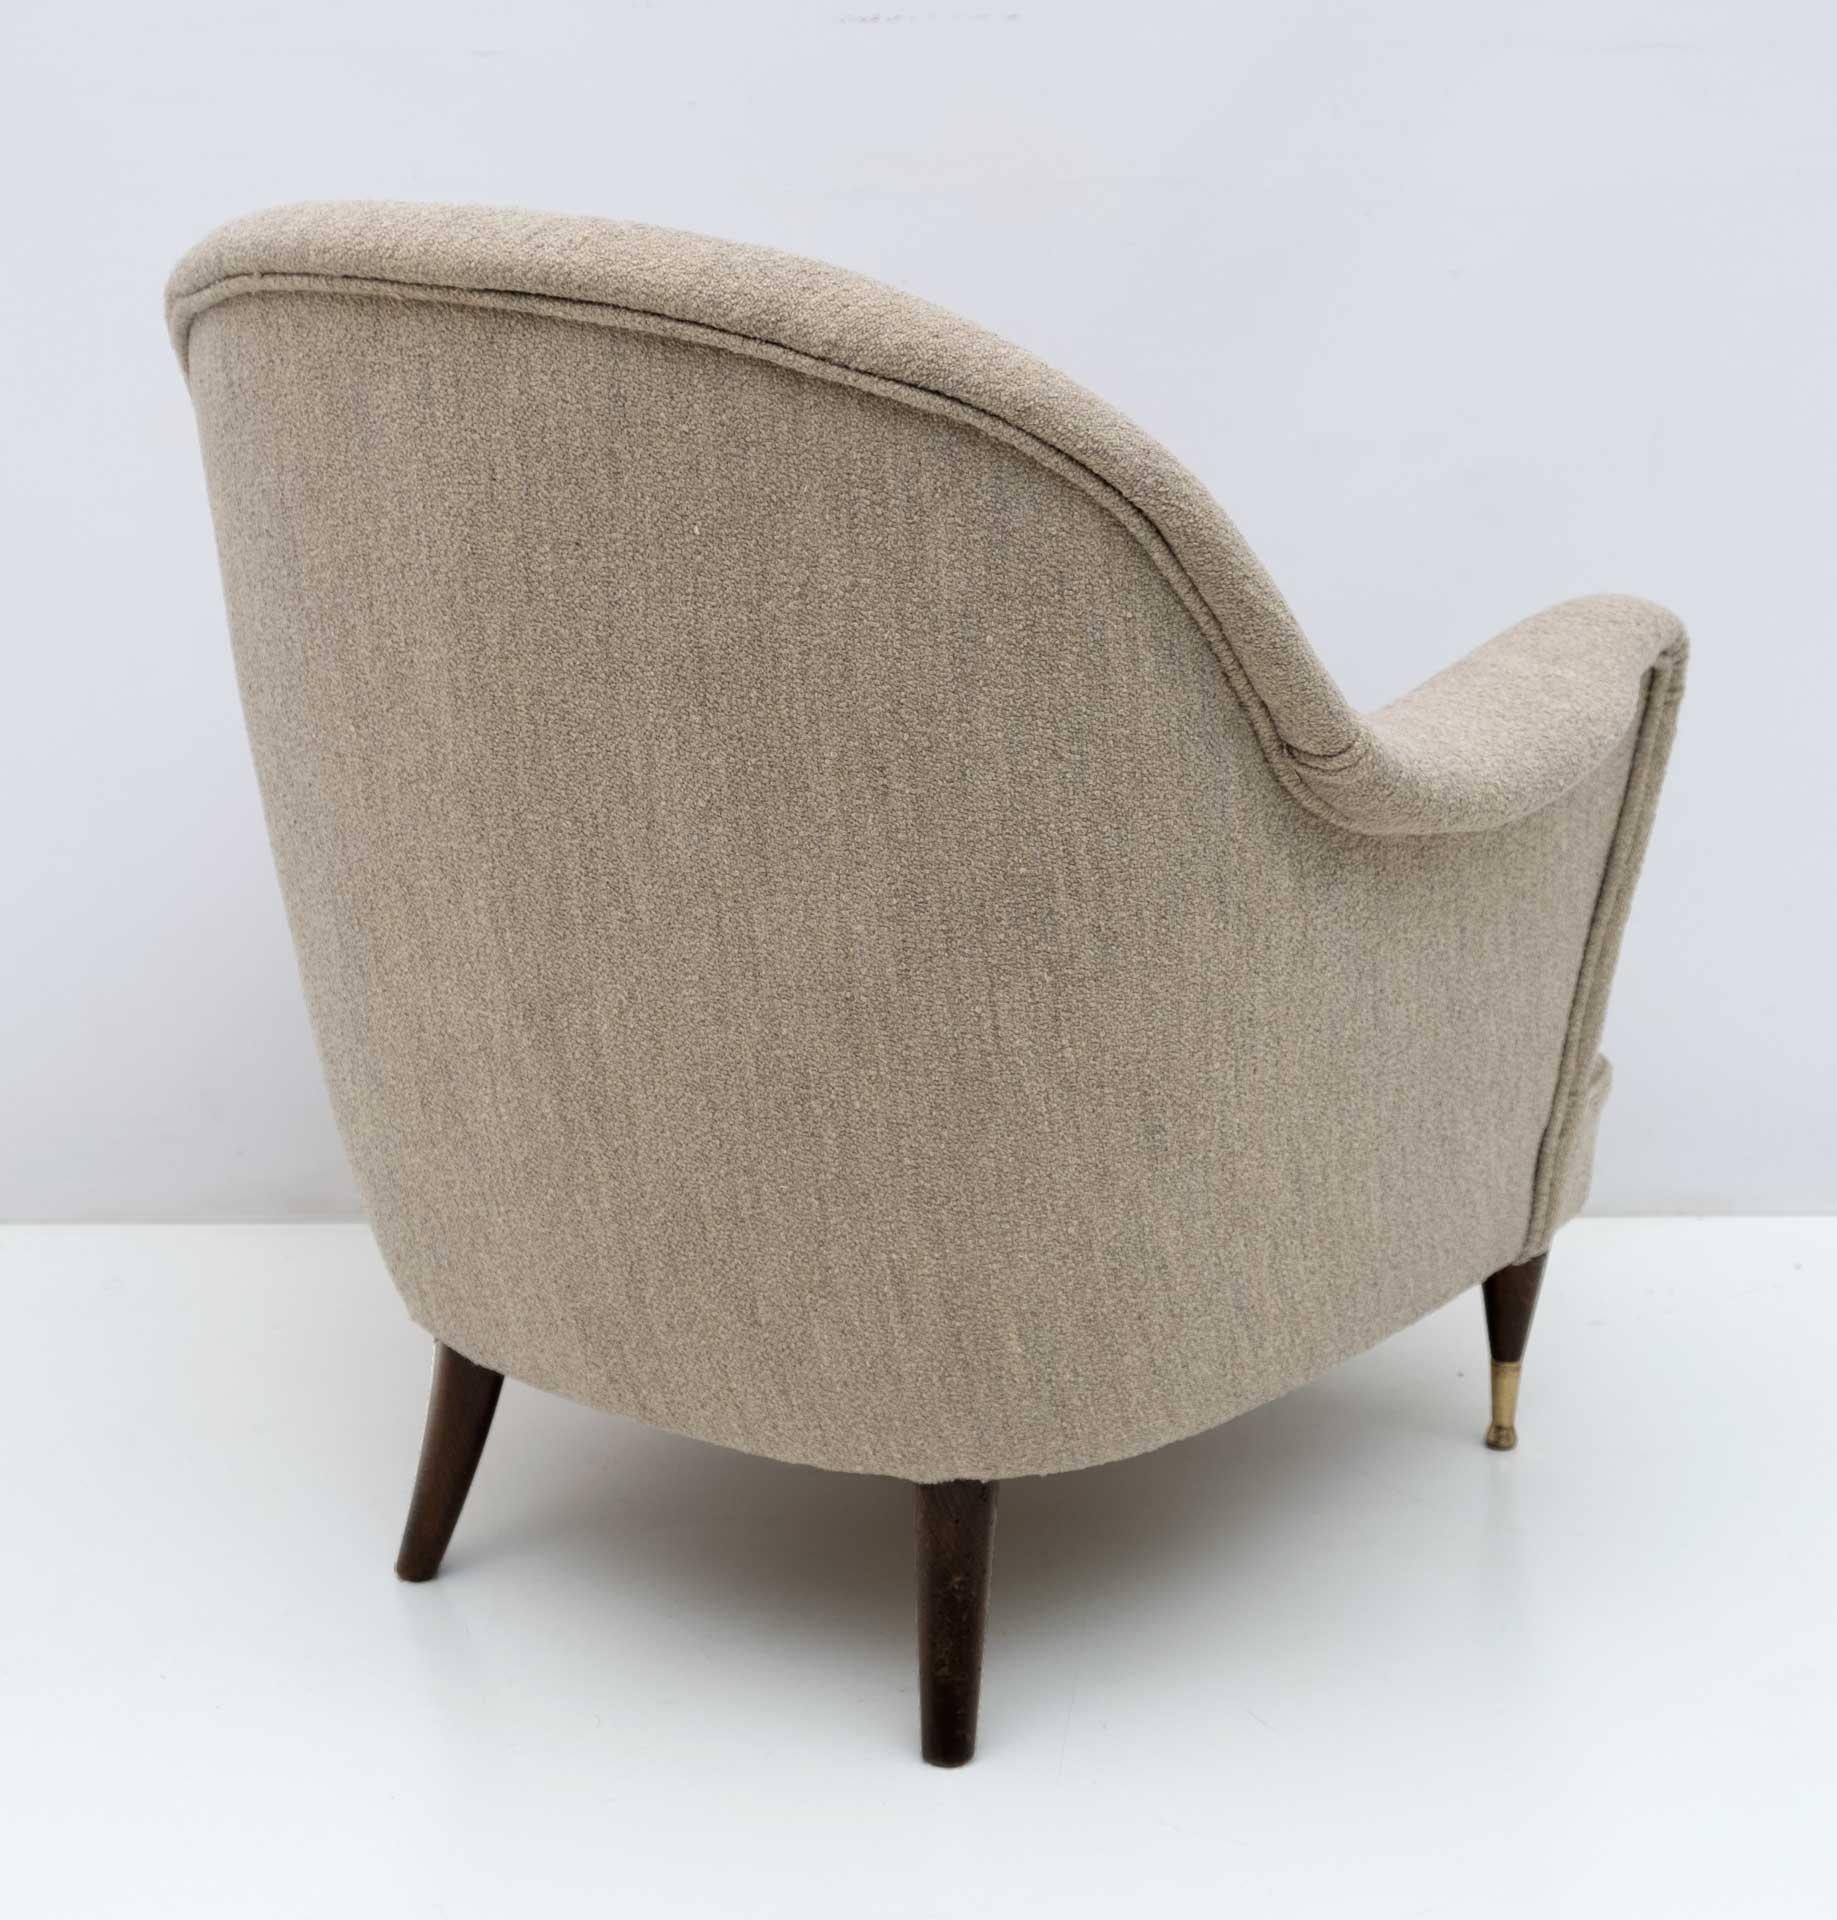 Pair of Gio Ponti Style MidCentury Modern Italian Armchairs for Isa Bergamo, 50s 1